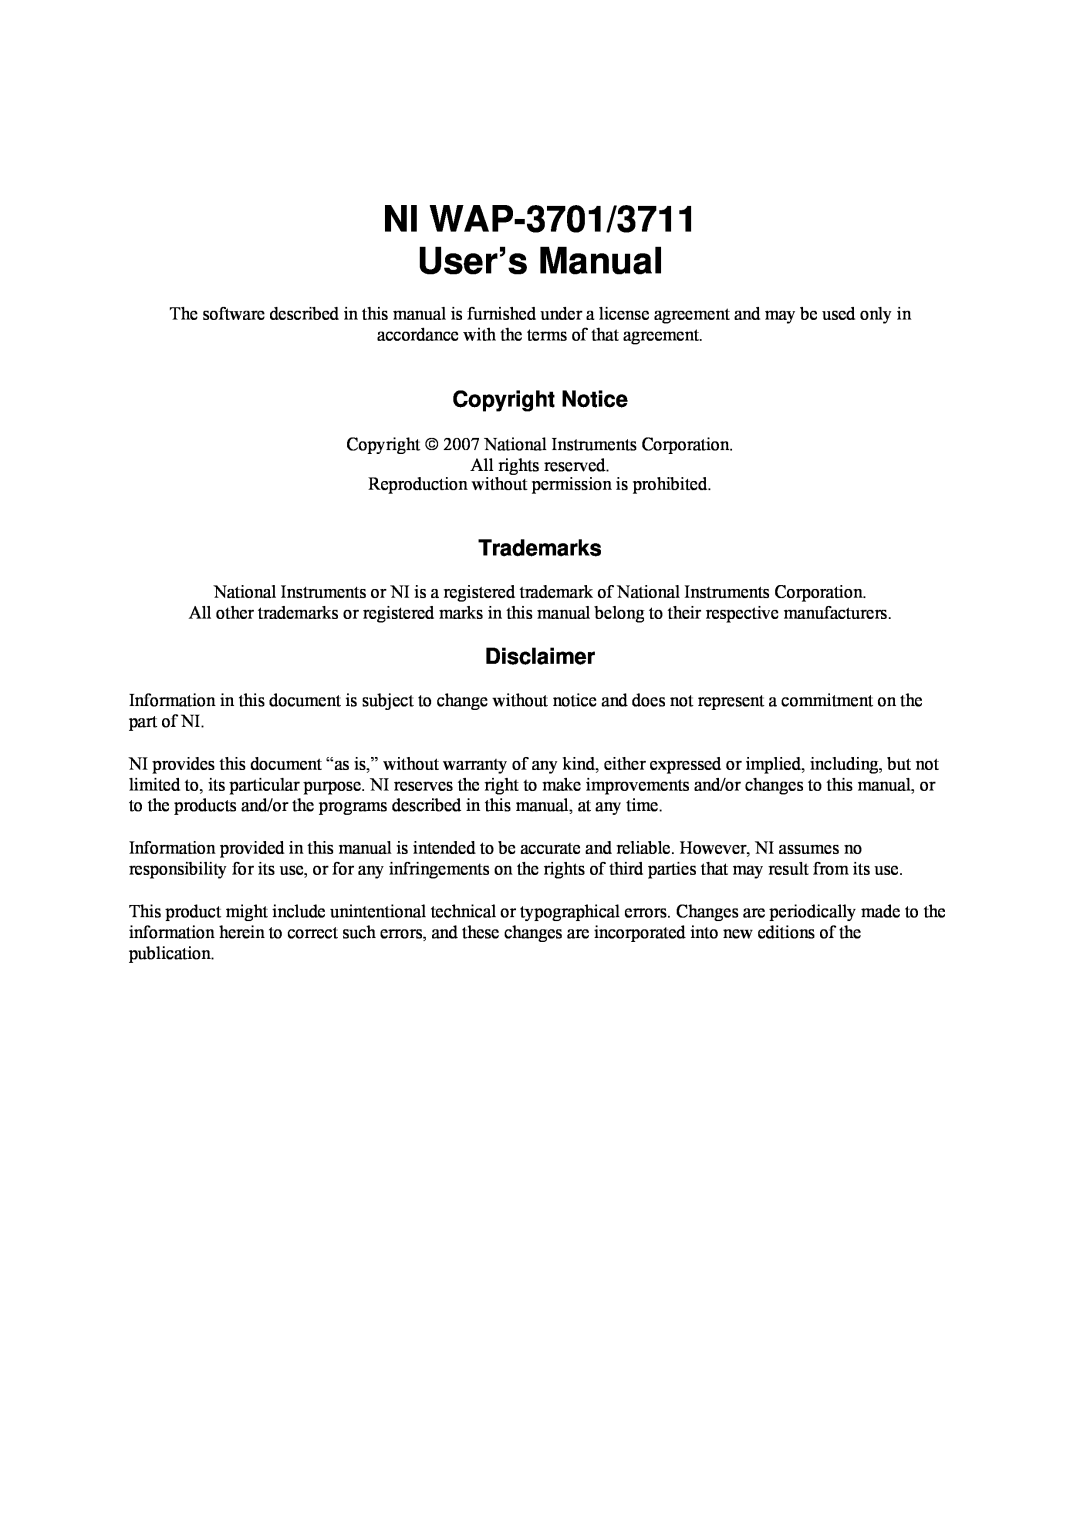 National Instruments WAP-3711 user manual Copyright Notice, Trademarks, Disclaimer, NI WAP-3701/3711 User’s Manual 